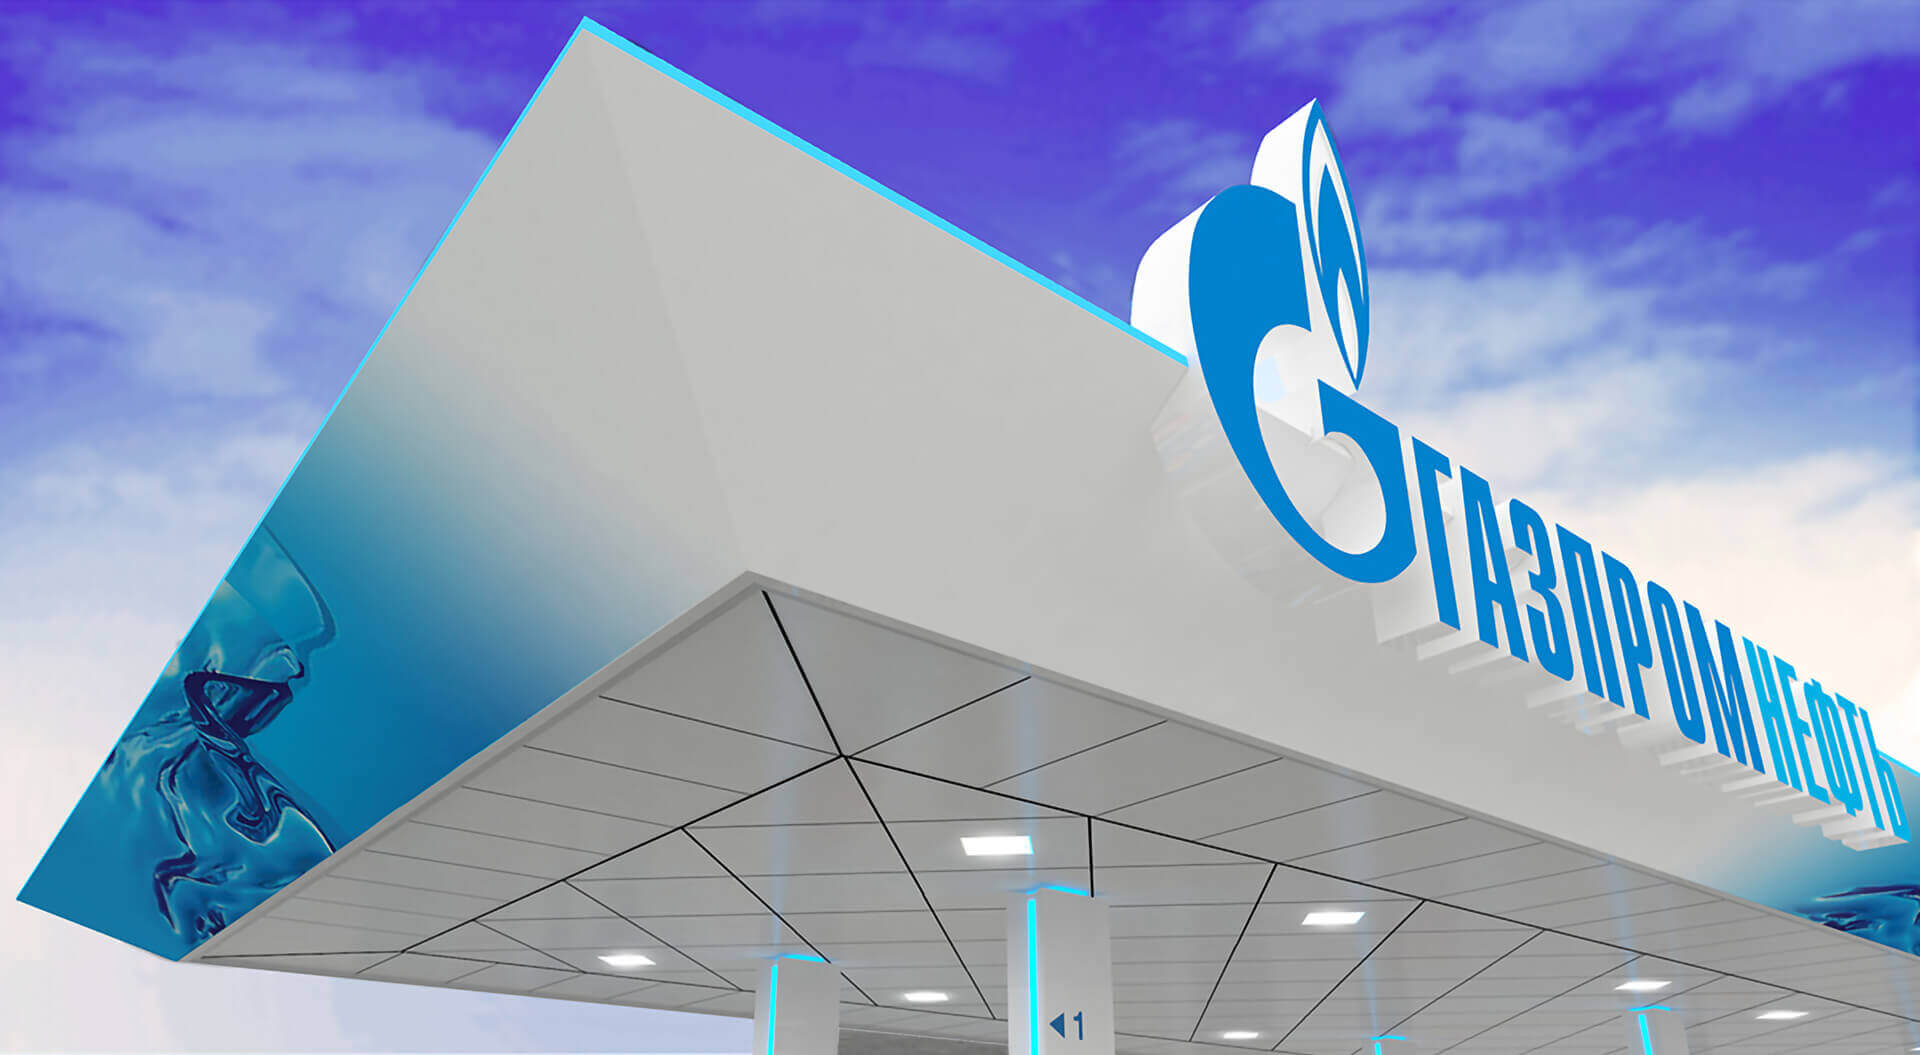 Gazprom Petrol Forecourt Benchmark, Creative Branding, Innovative Canopy Architecture, Design, Graphic Communications, St Petersburg Russia - CampbellRigg Agency